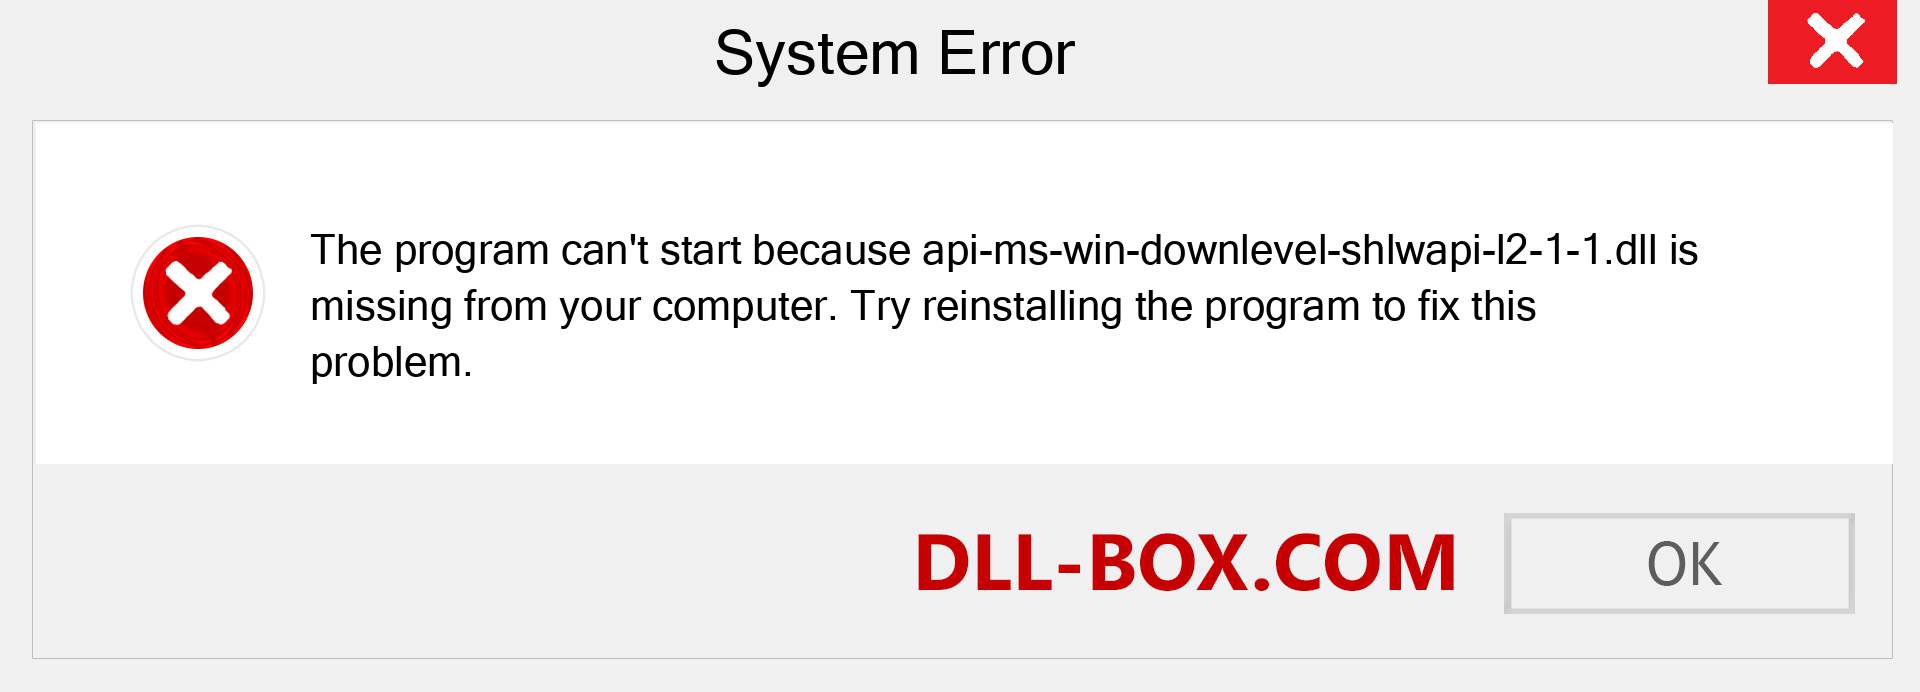  api-ms-win-downlevel-shlwapi-l2-1-1.dll file is missing?. Download for Windows 7, 8, 10 - Fix  api-ms-win-downlevel-shlwapi-l2-1-1 dll Missing Error on Windows, photos, images